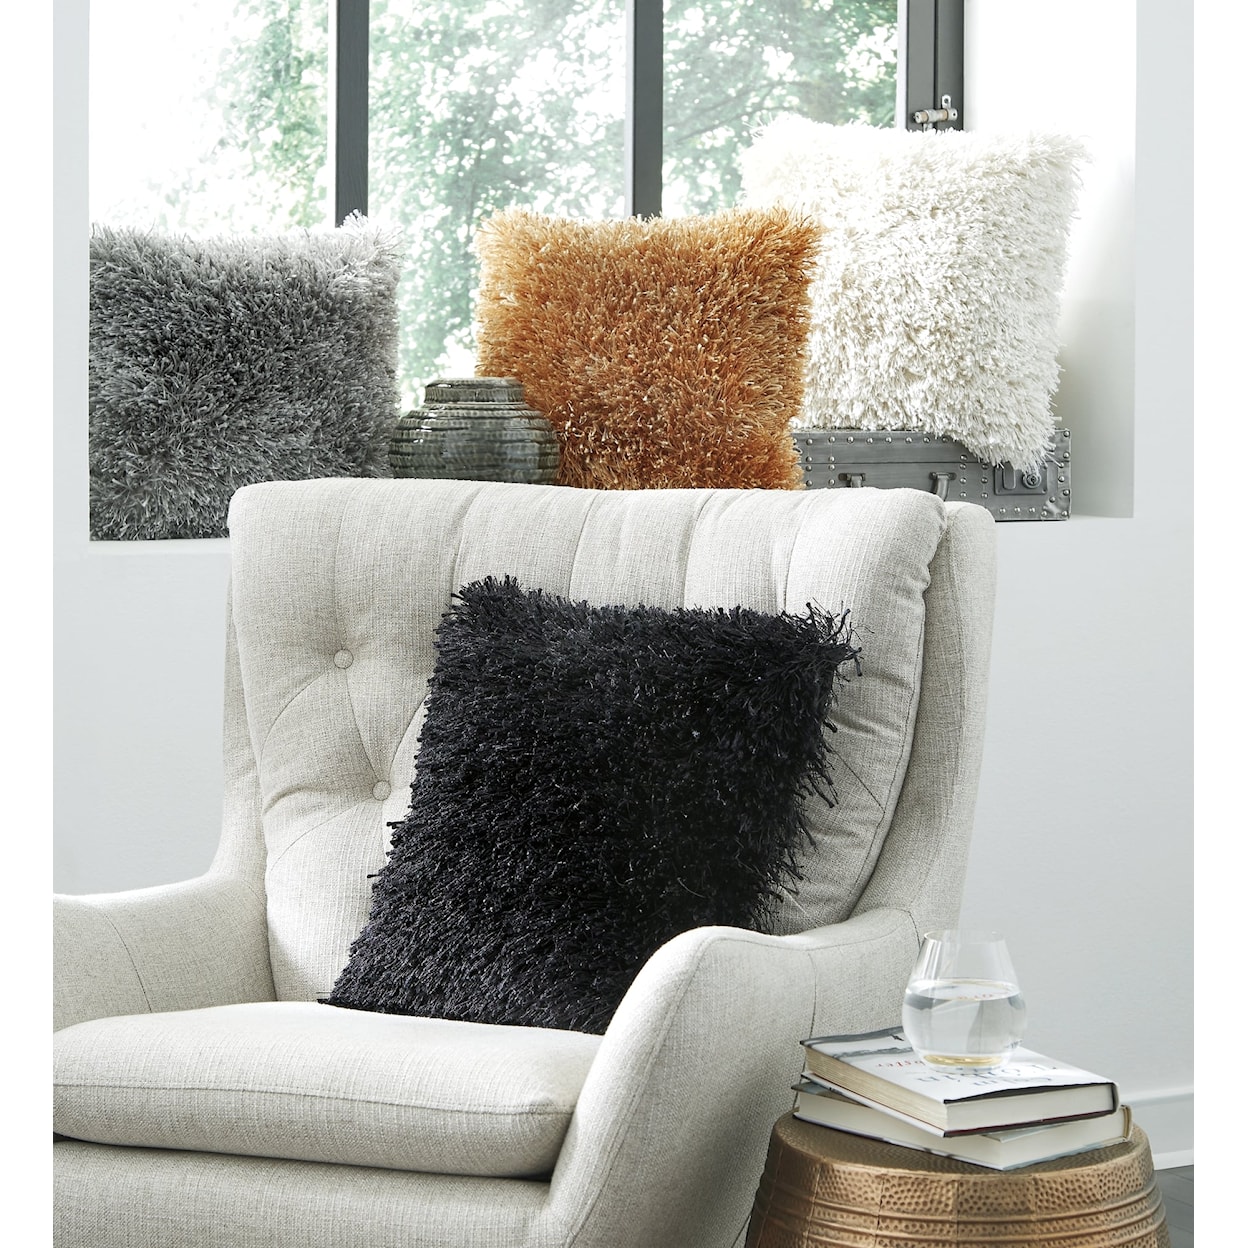 Ashley Furniture Signature Design Jasmen Pillow (Set of 4)